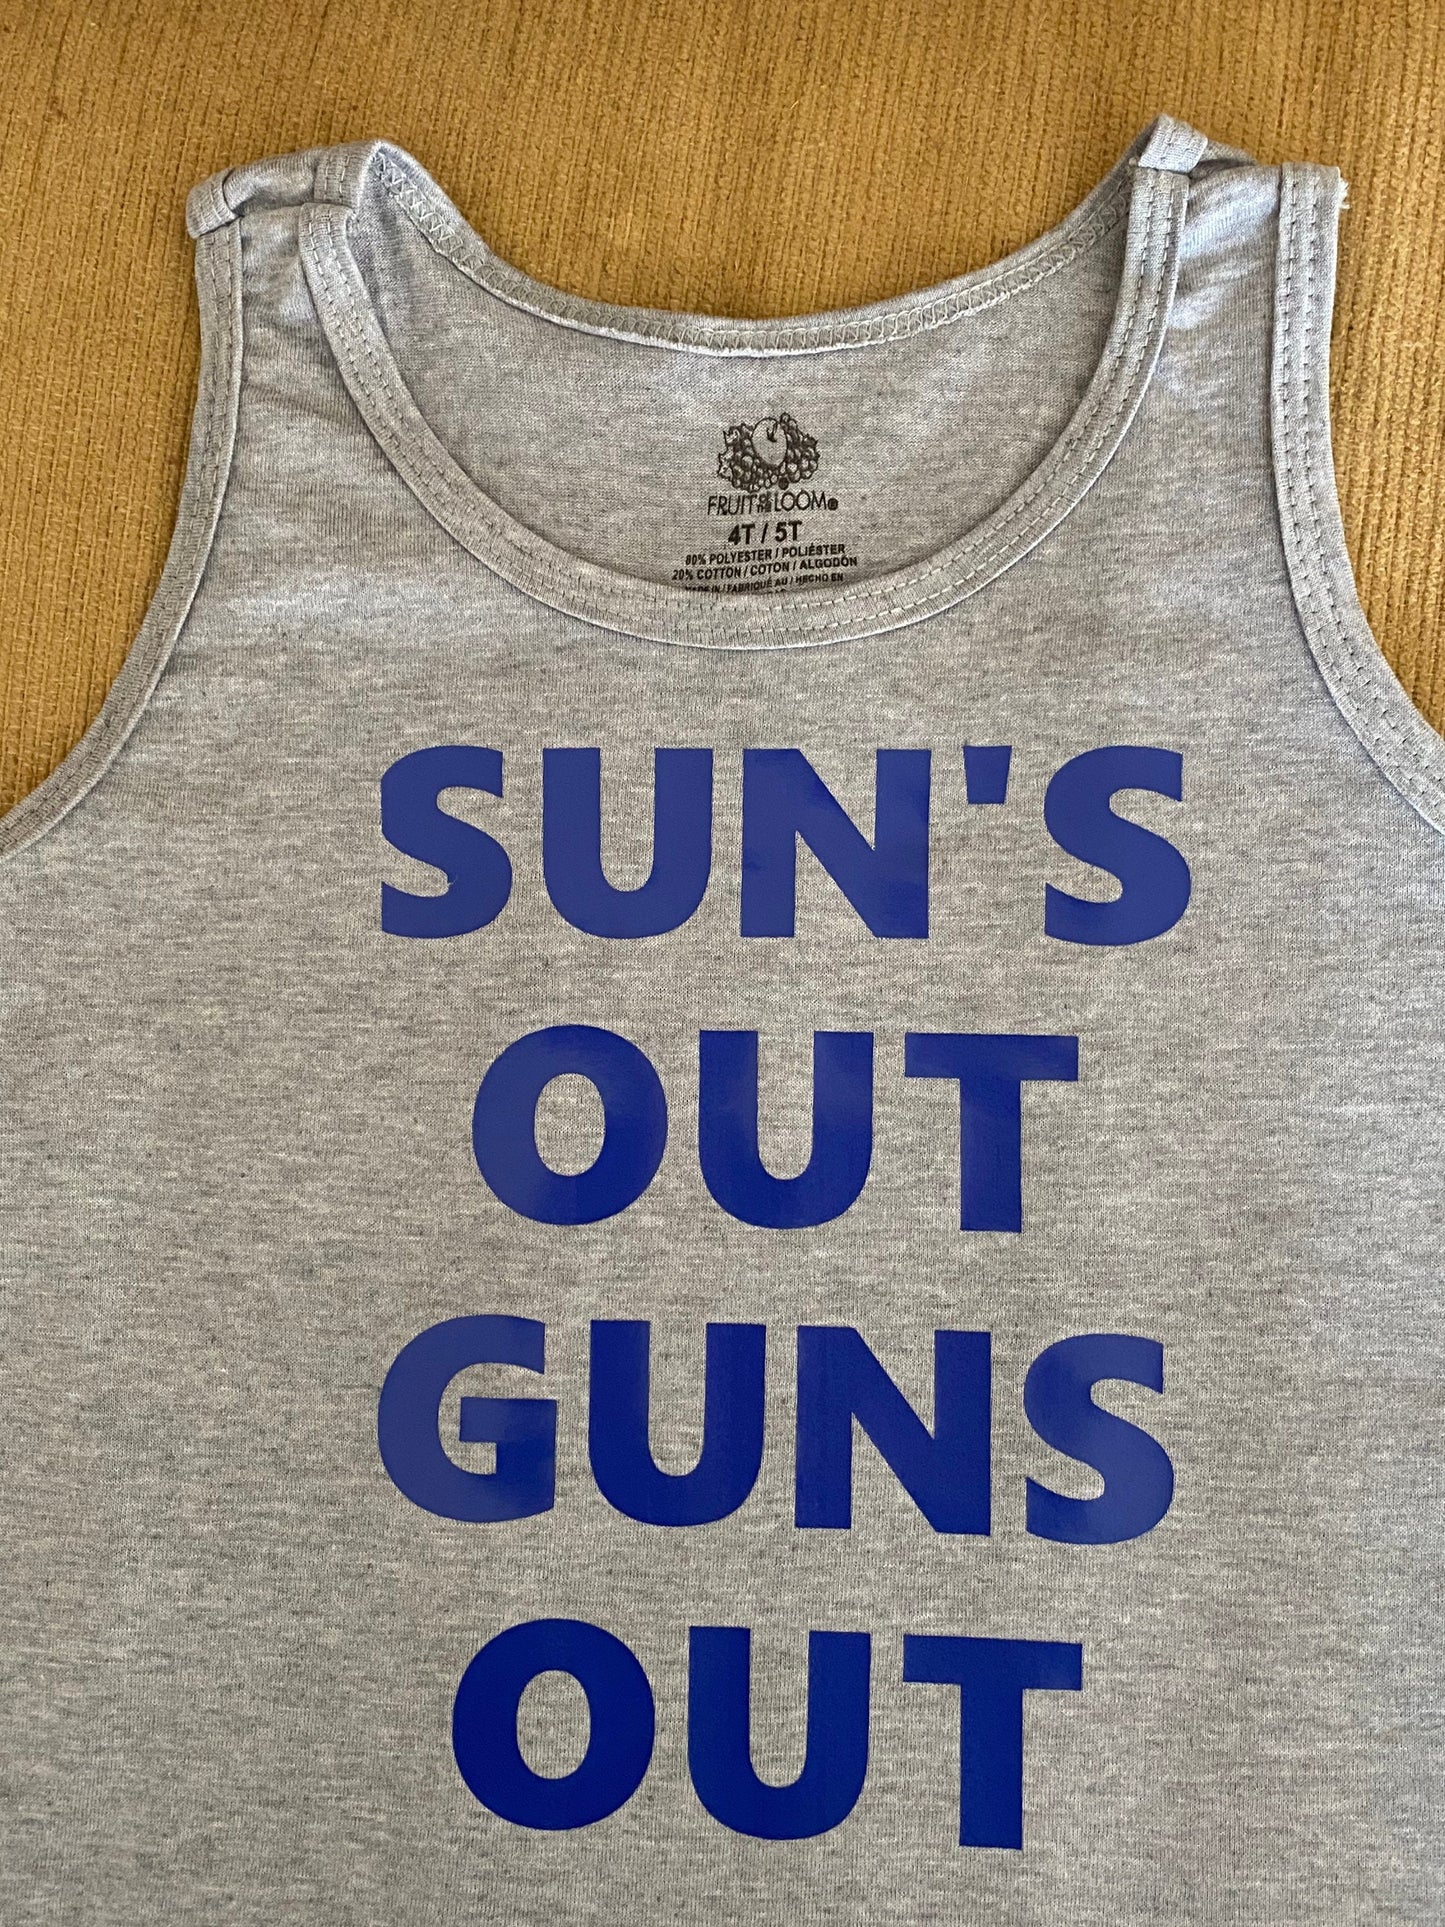 Suns out, guns out/ Tank top /summer shirt/ funny shirt / funny muscle shirt / funny gym shirt / funny kids shirt / funny tank top/funny tsh